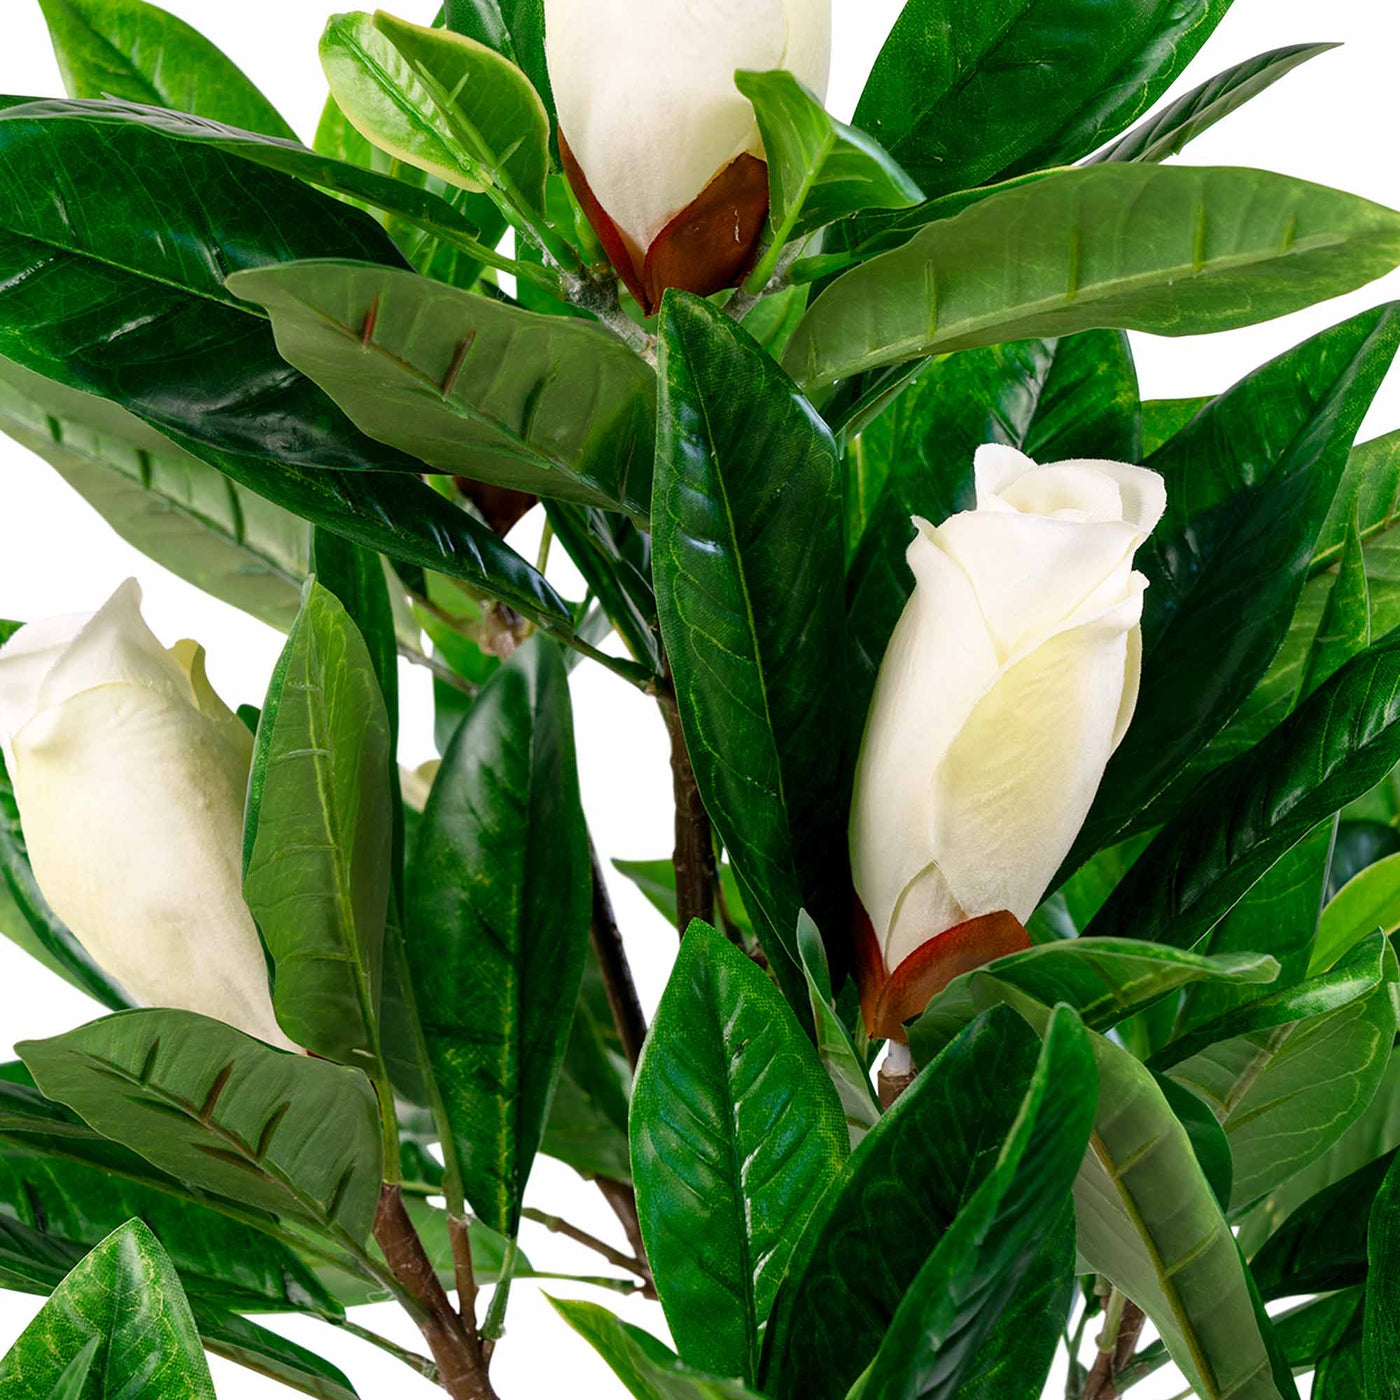 Magnolia tekokasvi, 90 cm - Mööpeli.com